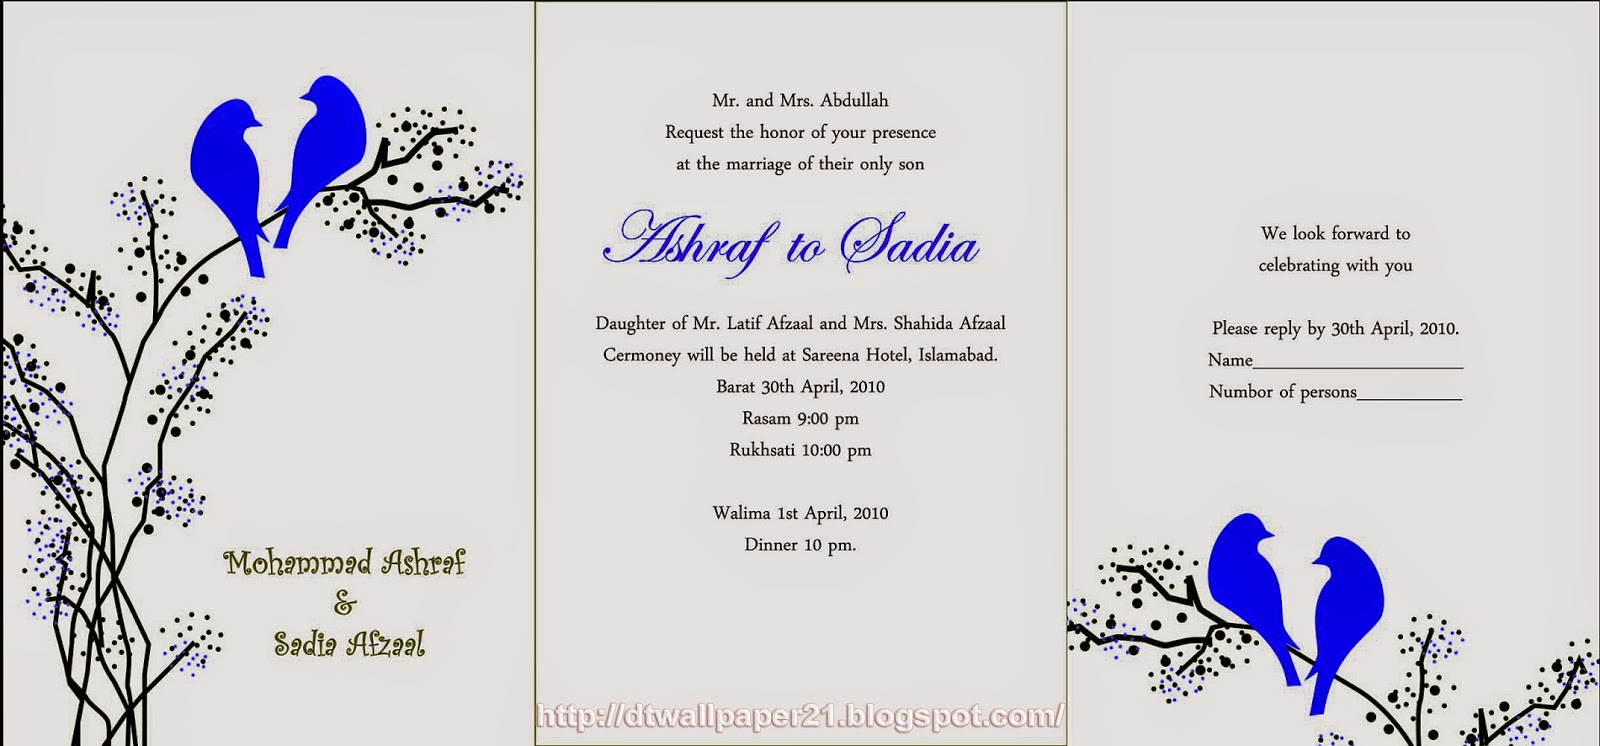 Wedding invitation cards vectors